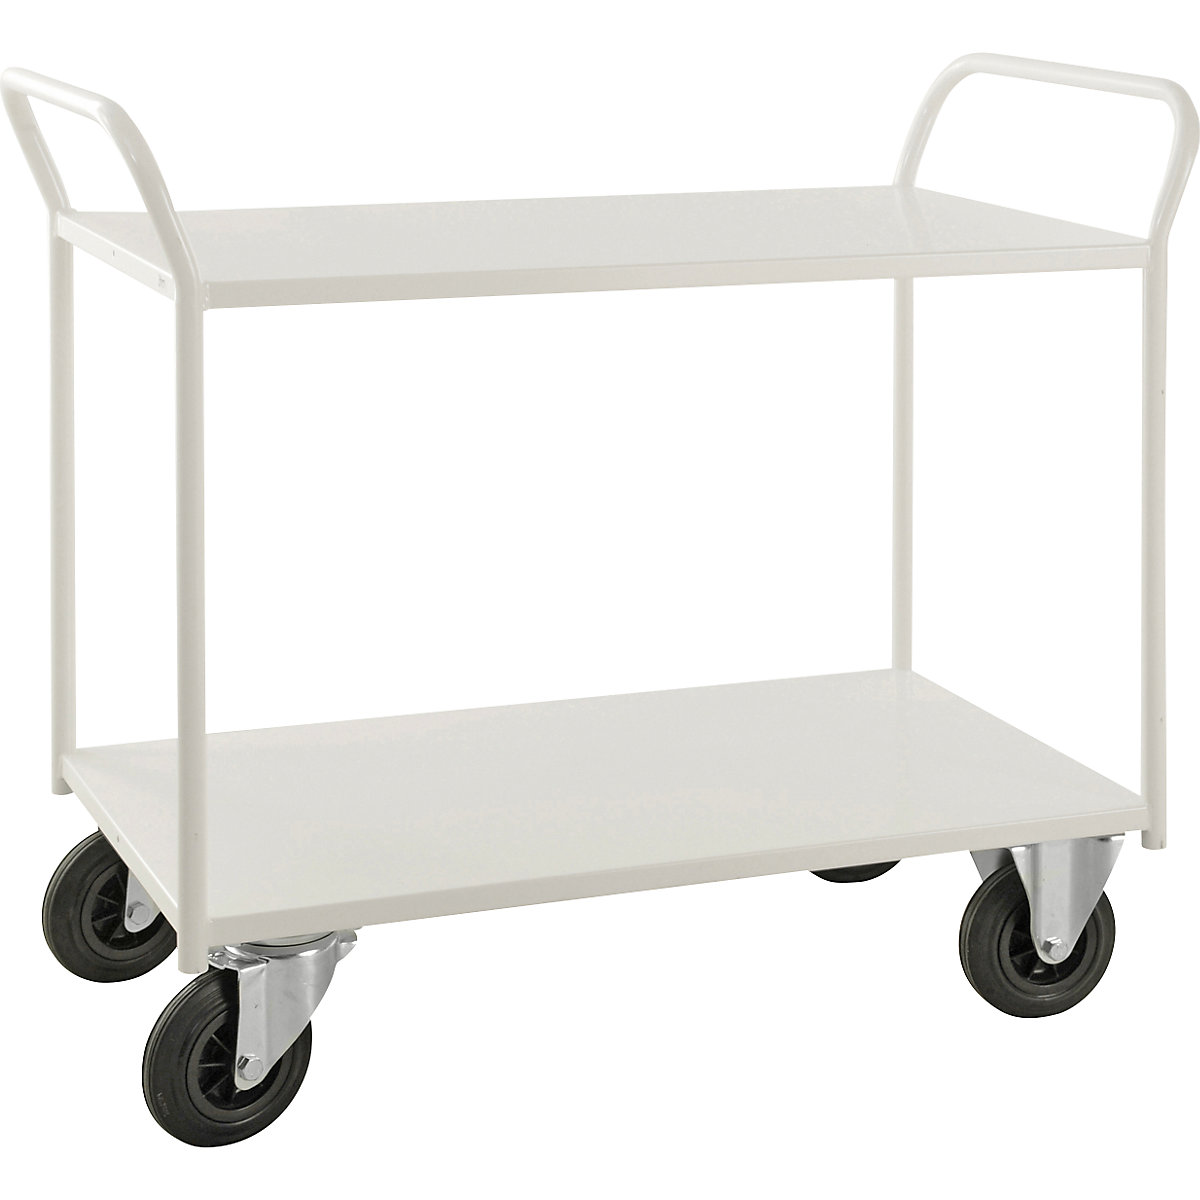 KM41 table trolley – Kongamek, 2 shelves, LxWxH 1080 x 450 x 975 mm, white, 2 swivel castors with stops, 2 fixed castors, 5+ items-7